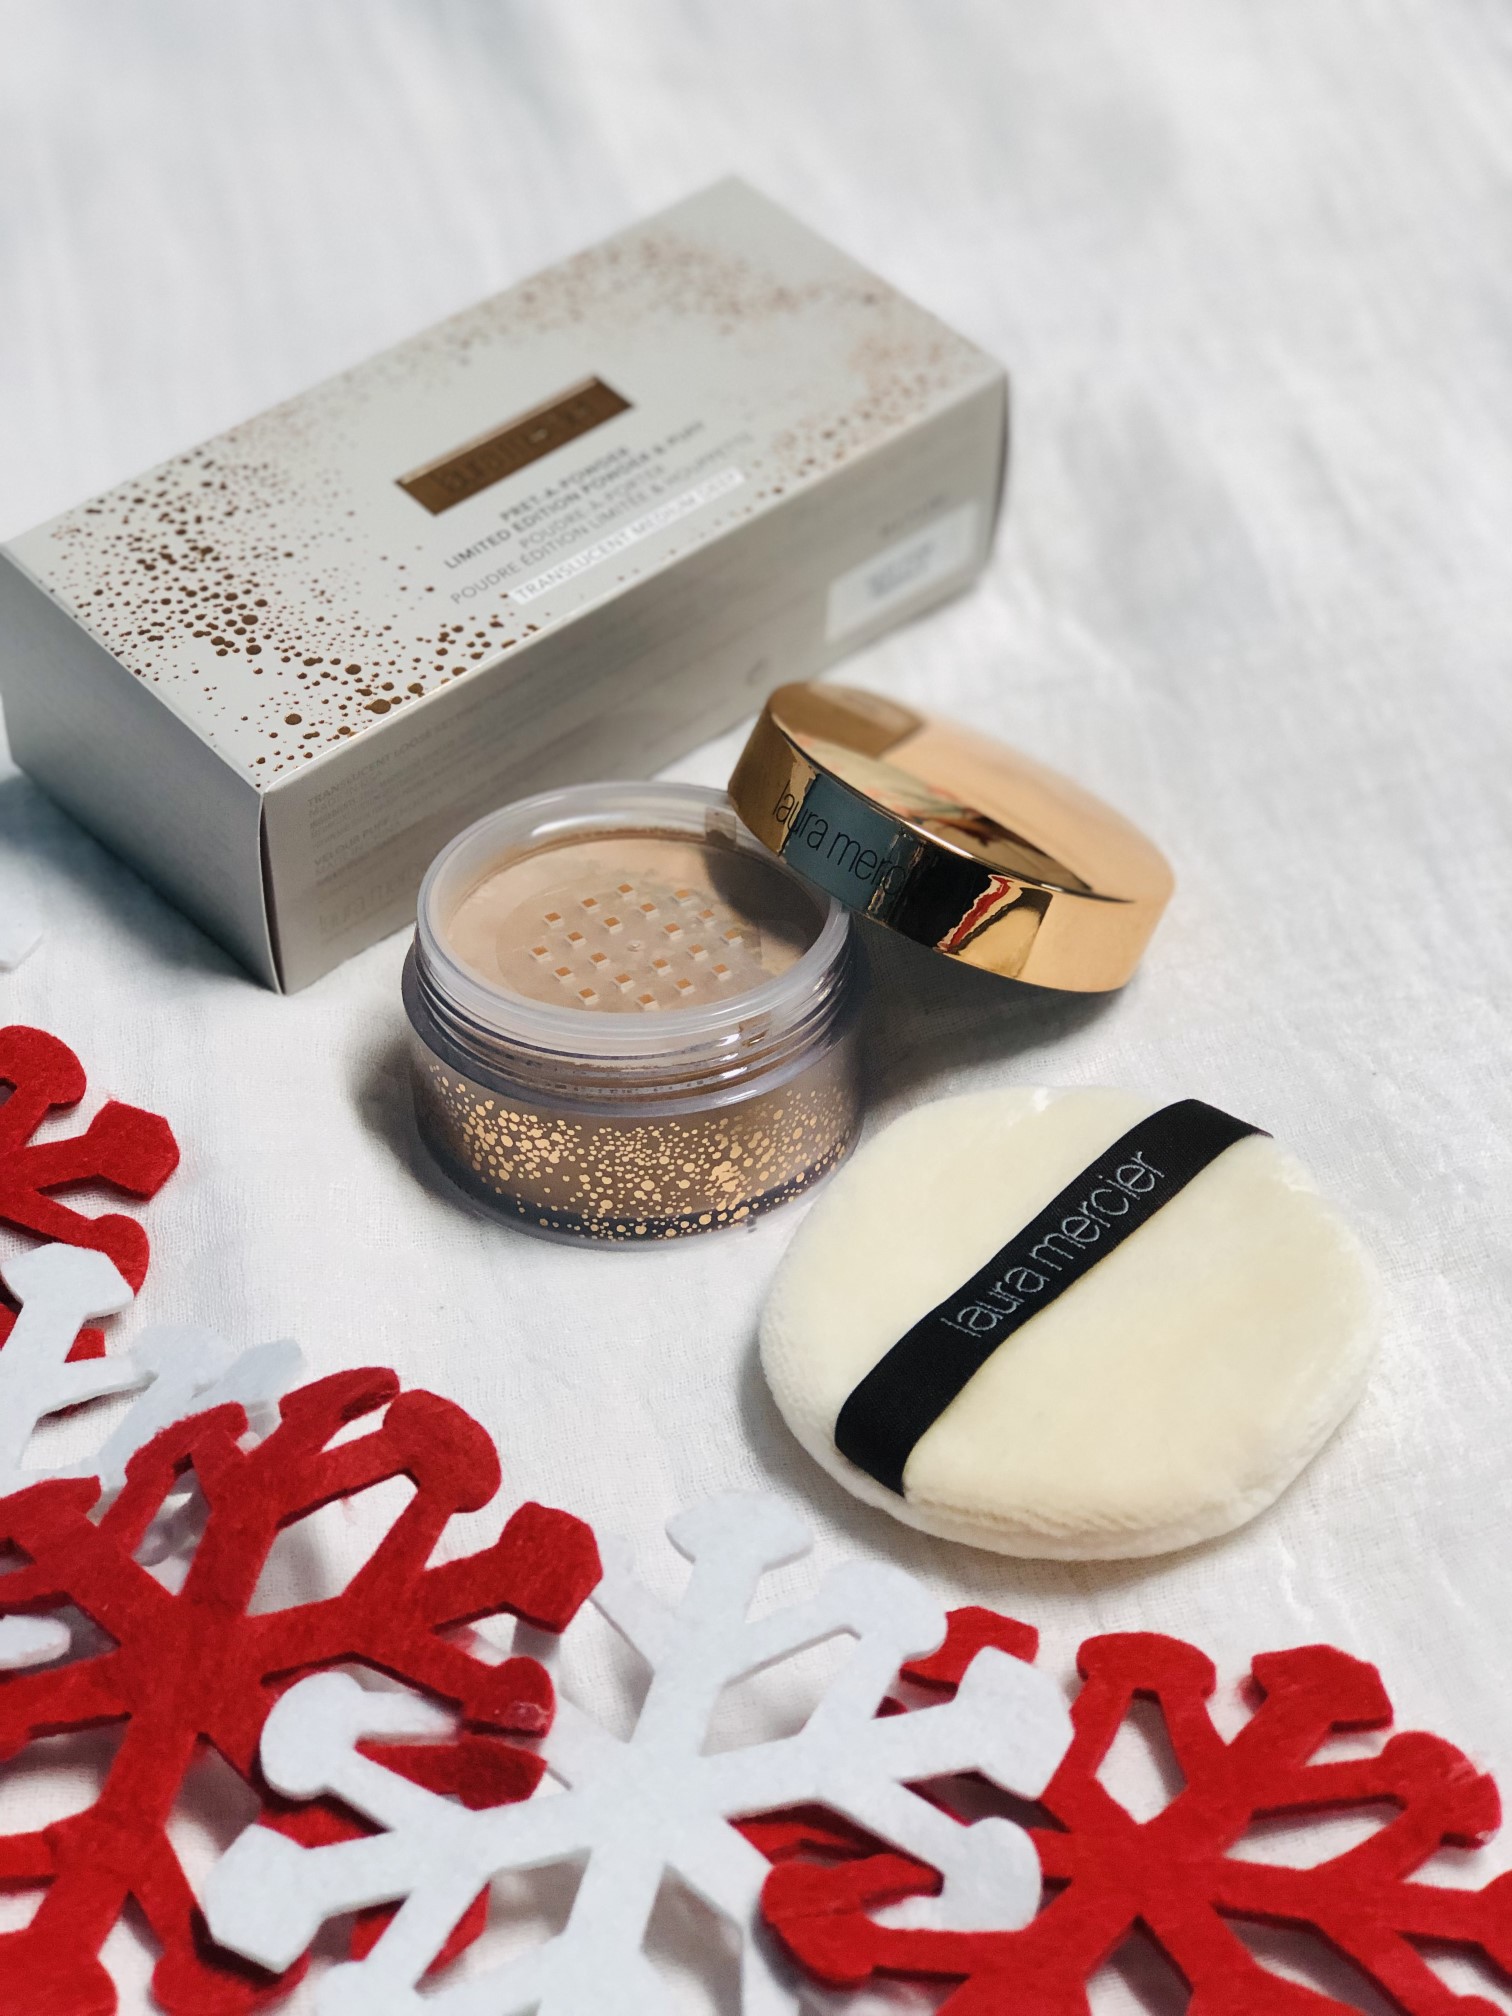 laura mercier translucent loose setting powder limited edition 2018